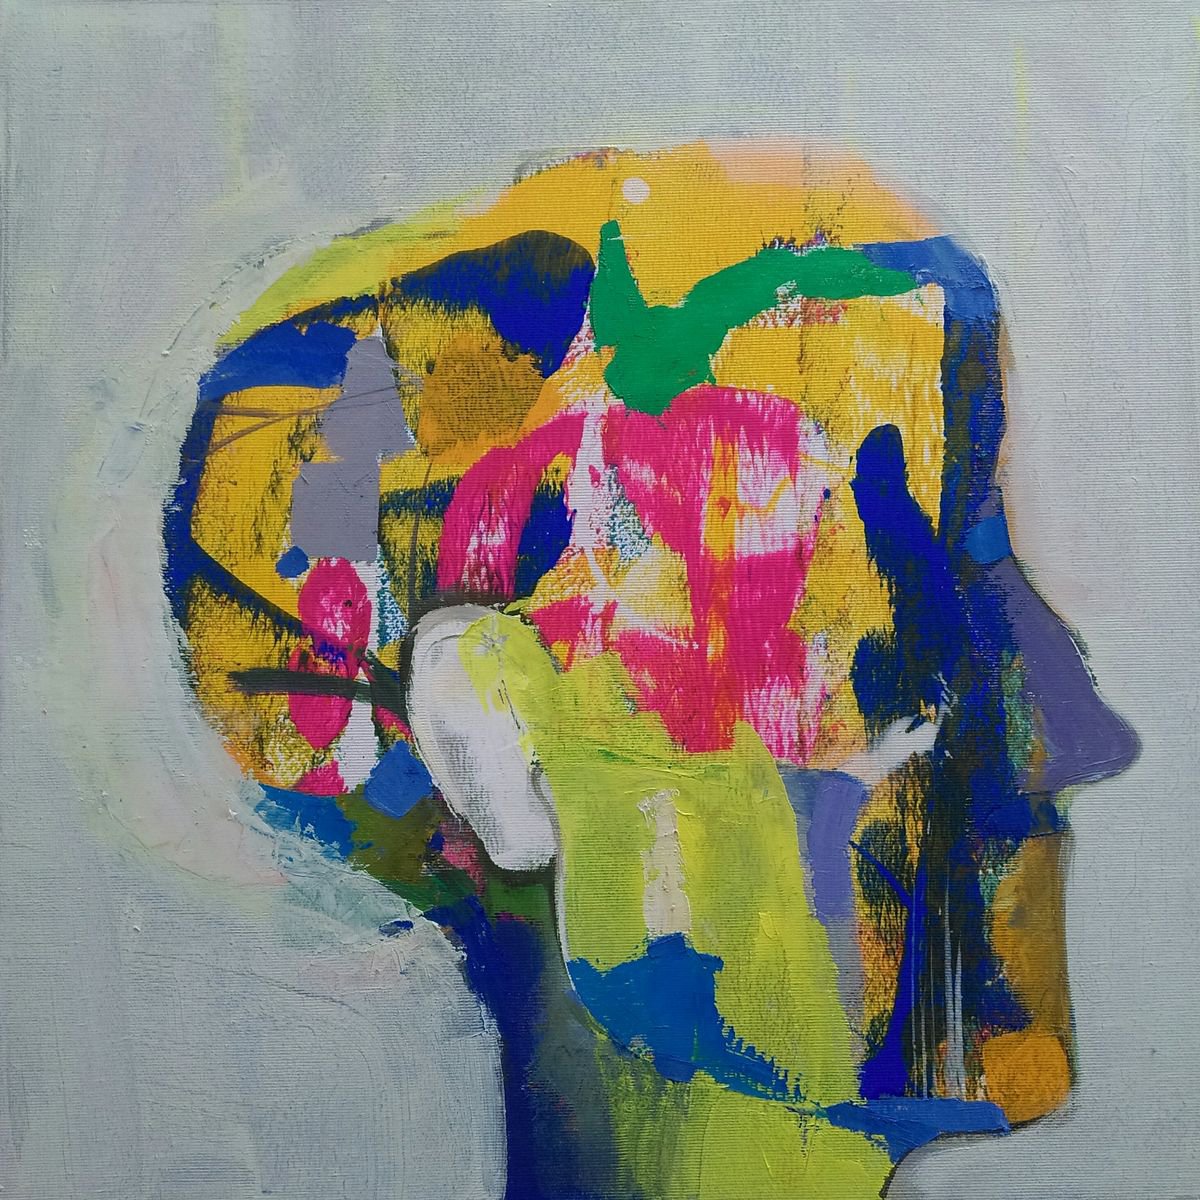 The head1 by Victoria Cozmolici